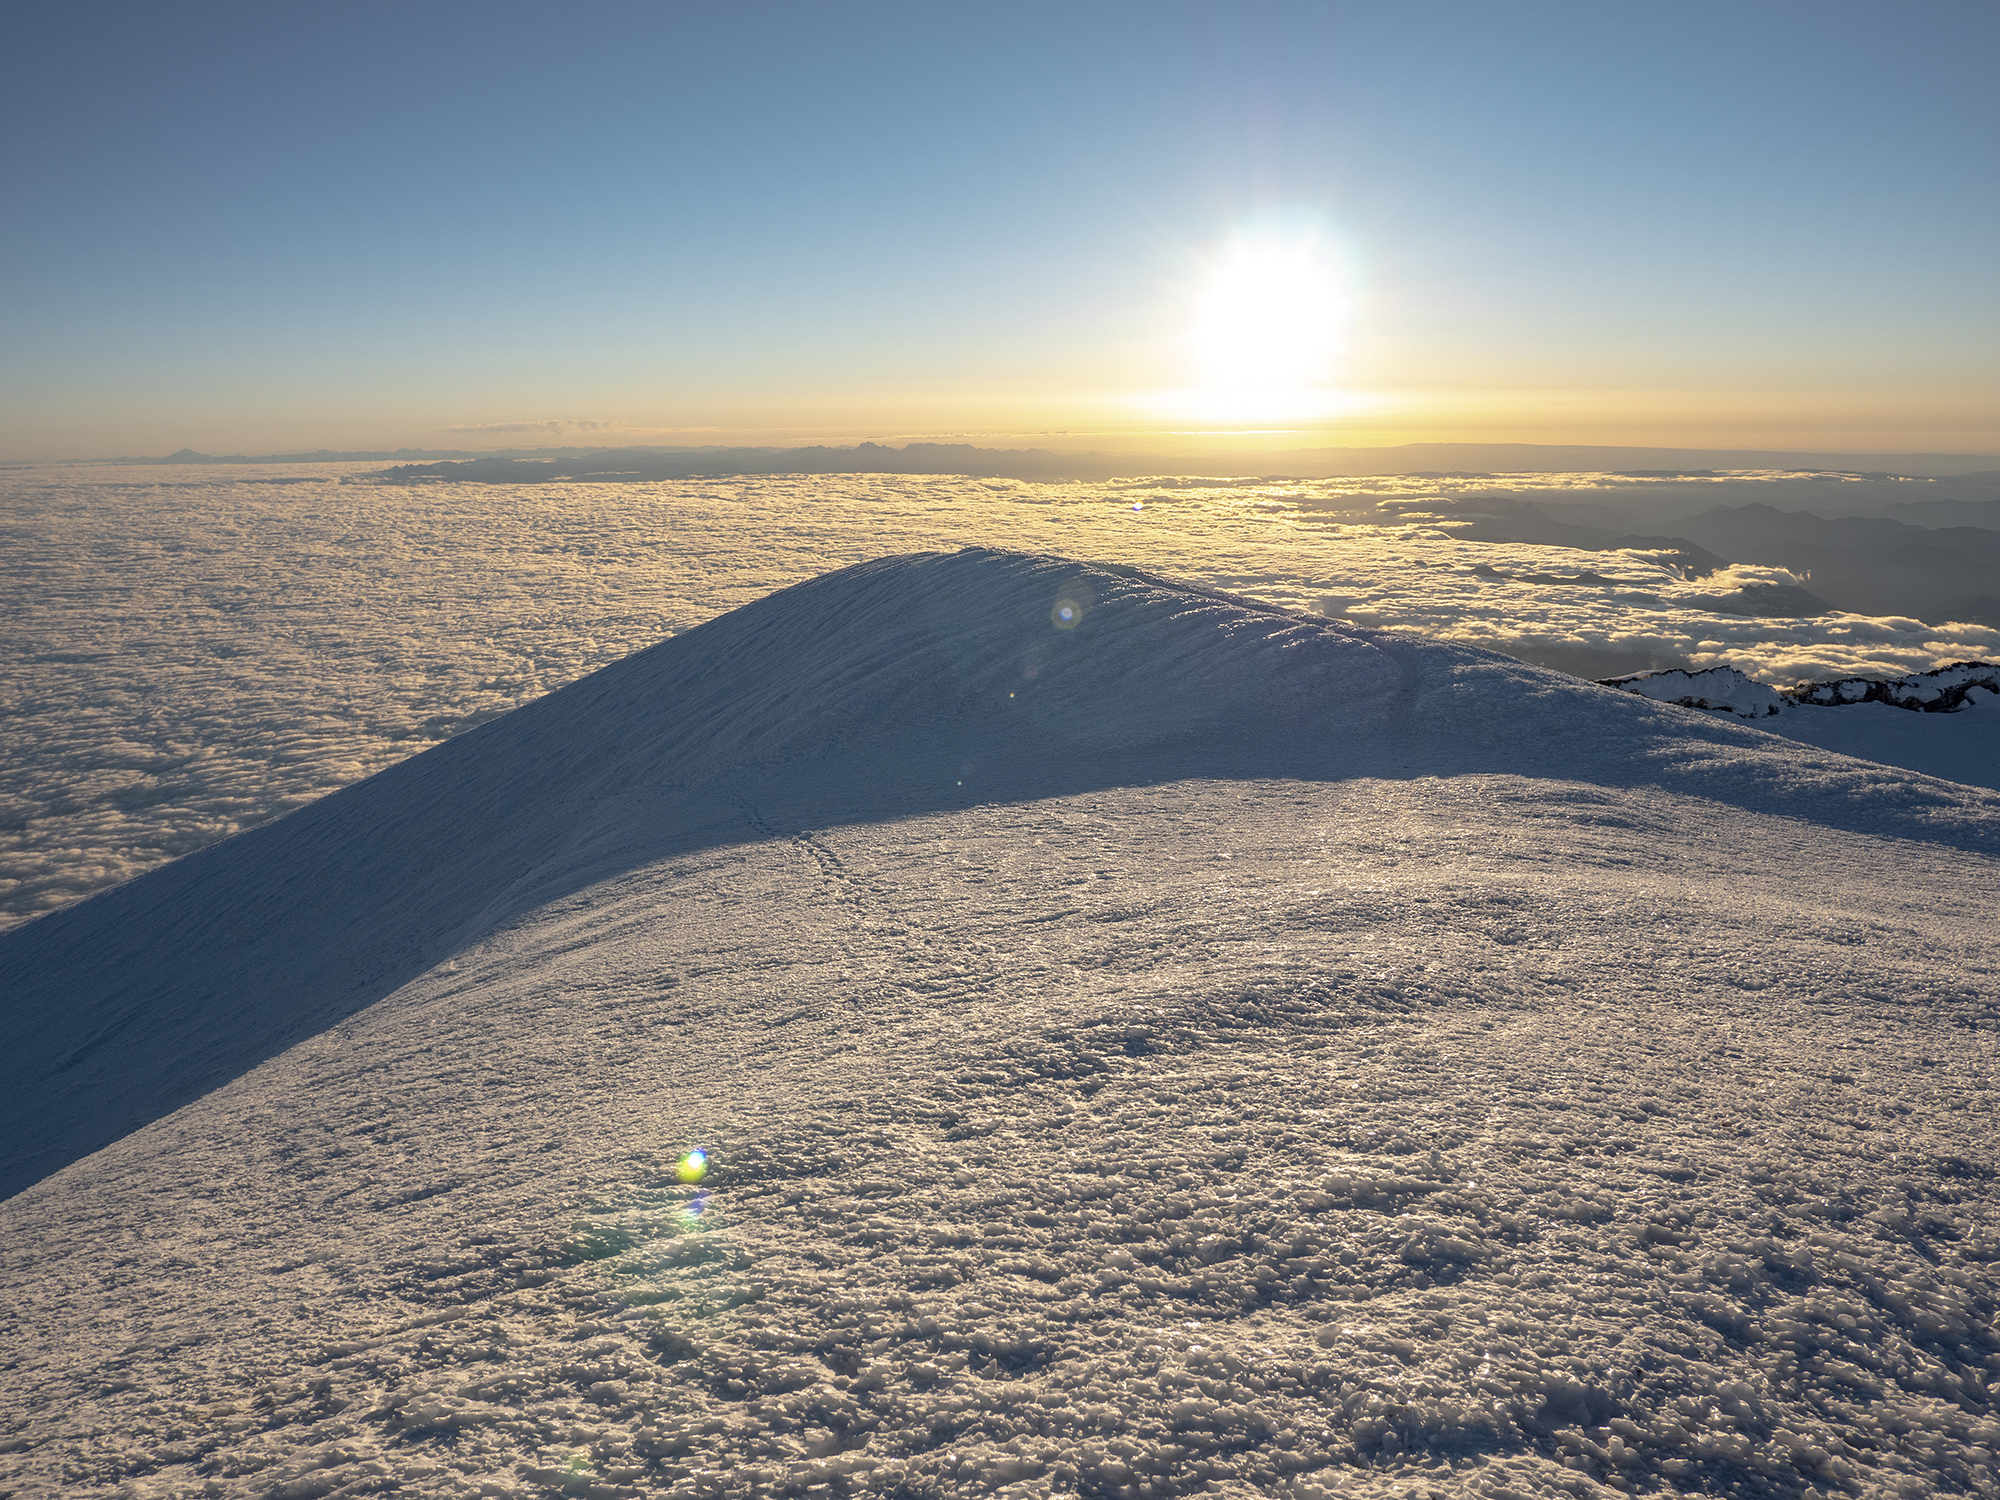 Summiting Mount Rainier